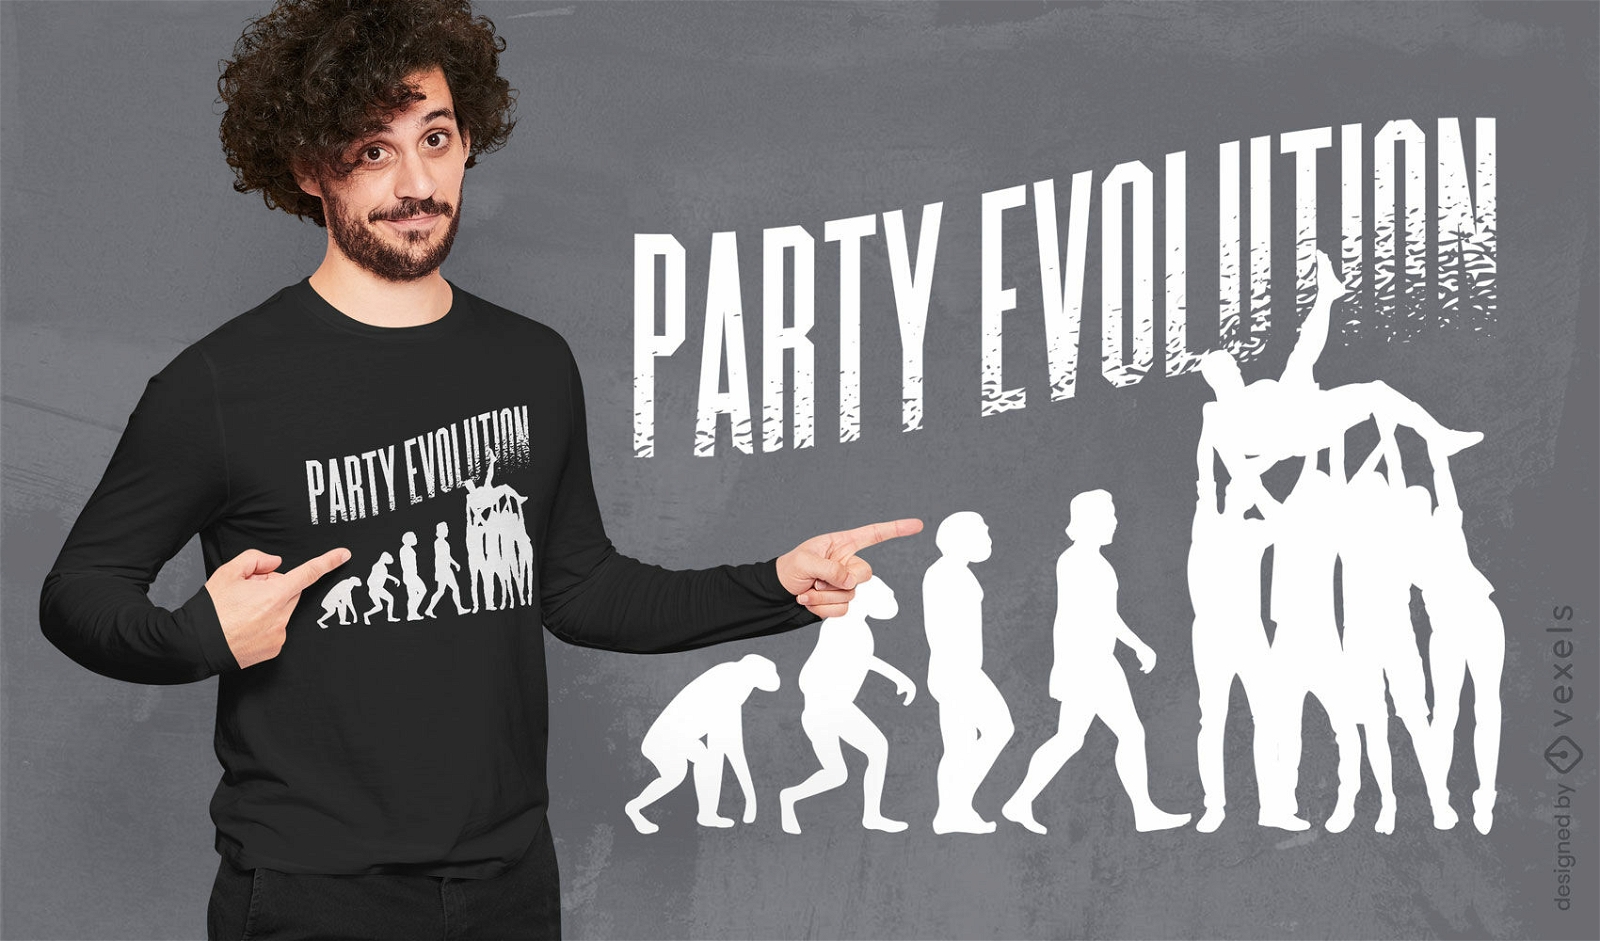 Party evolution t-shirt design